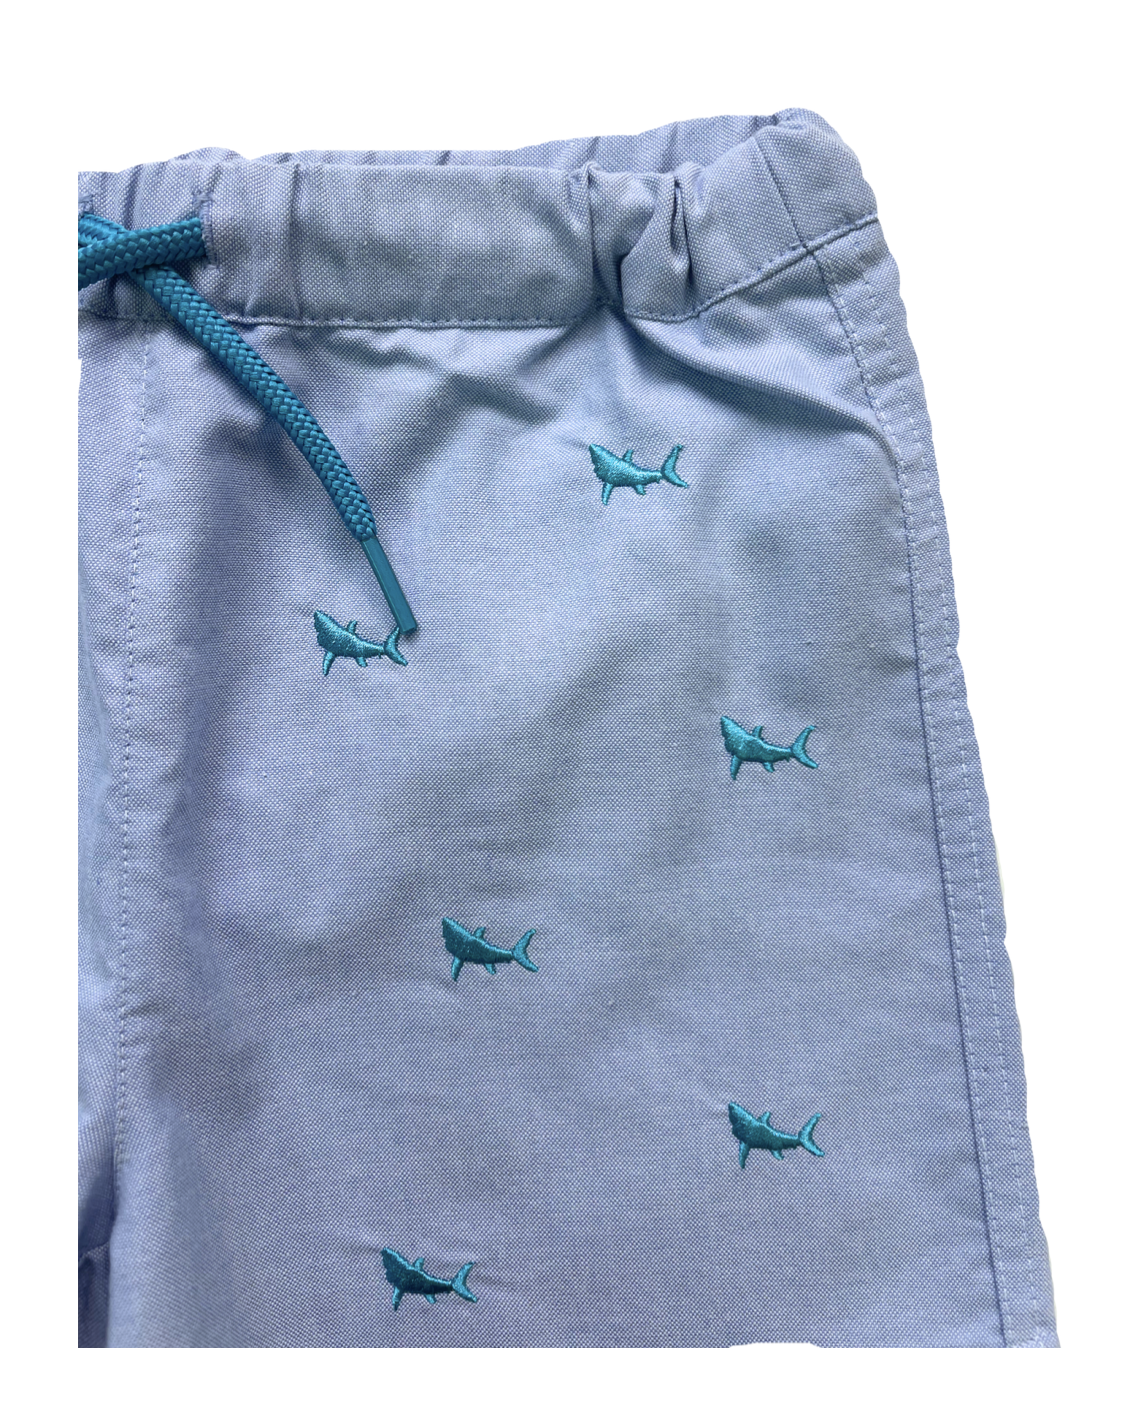 JACADI - Short de bain bleu clair requins turquoises brodés - 4 ans